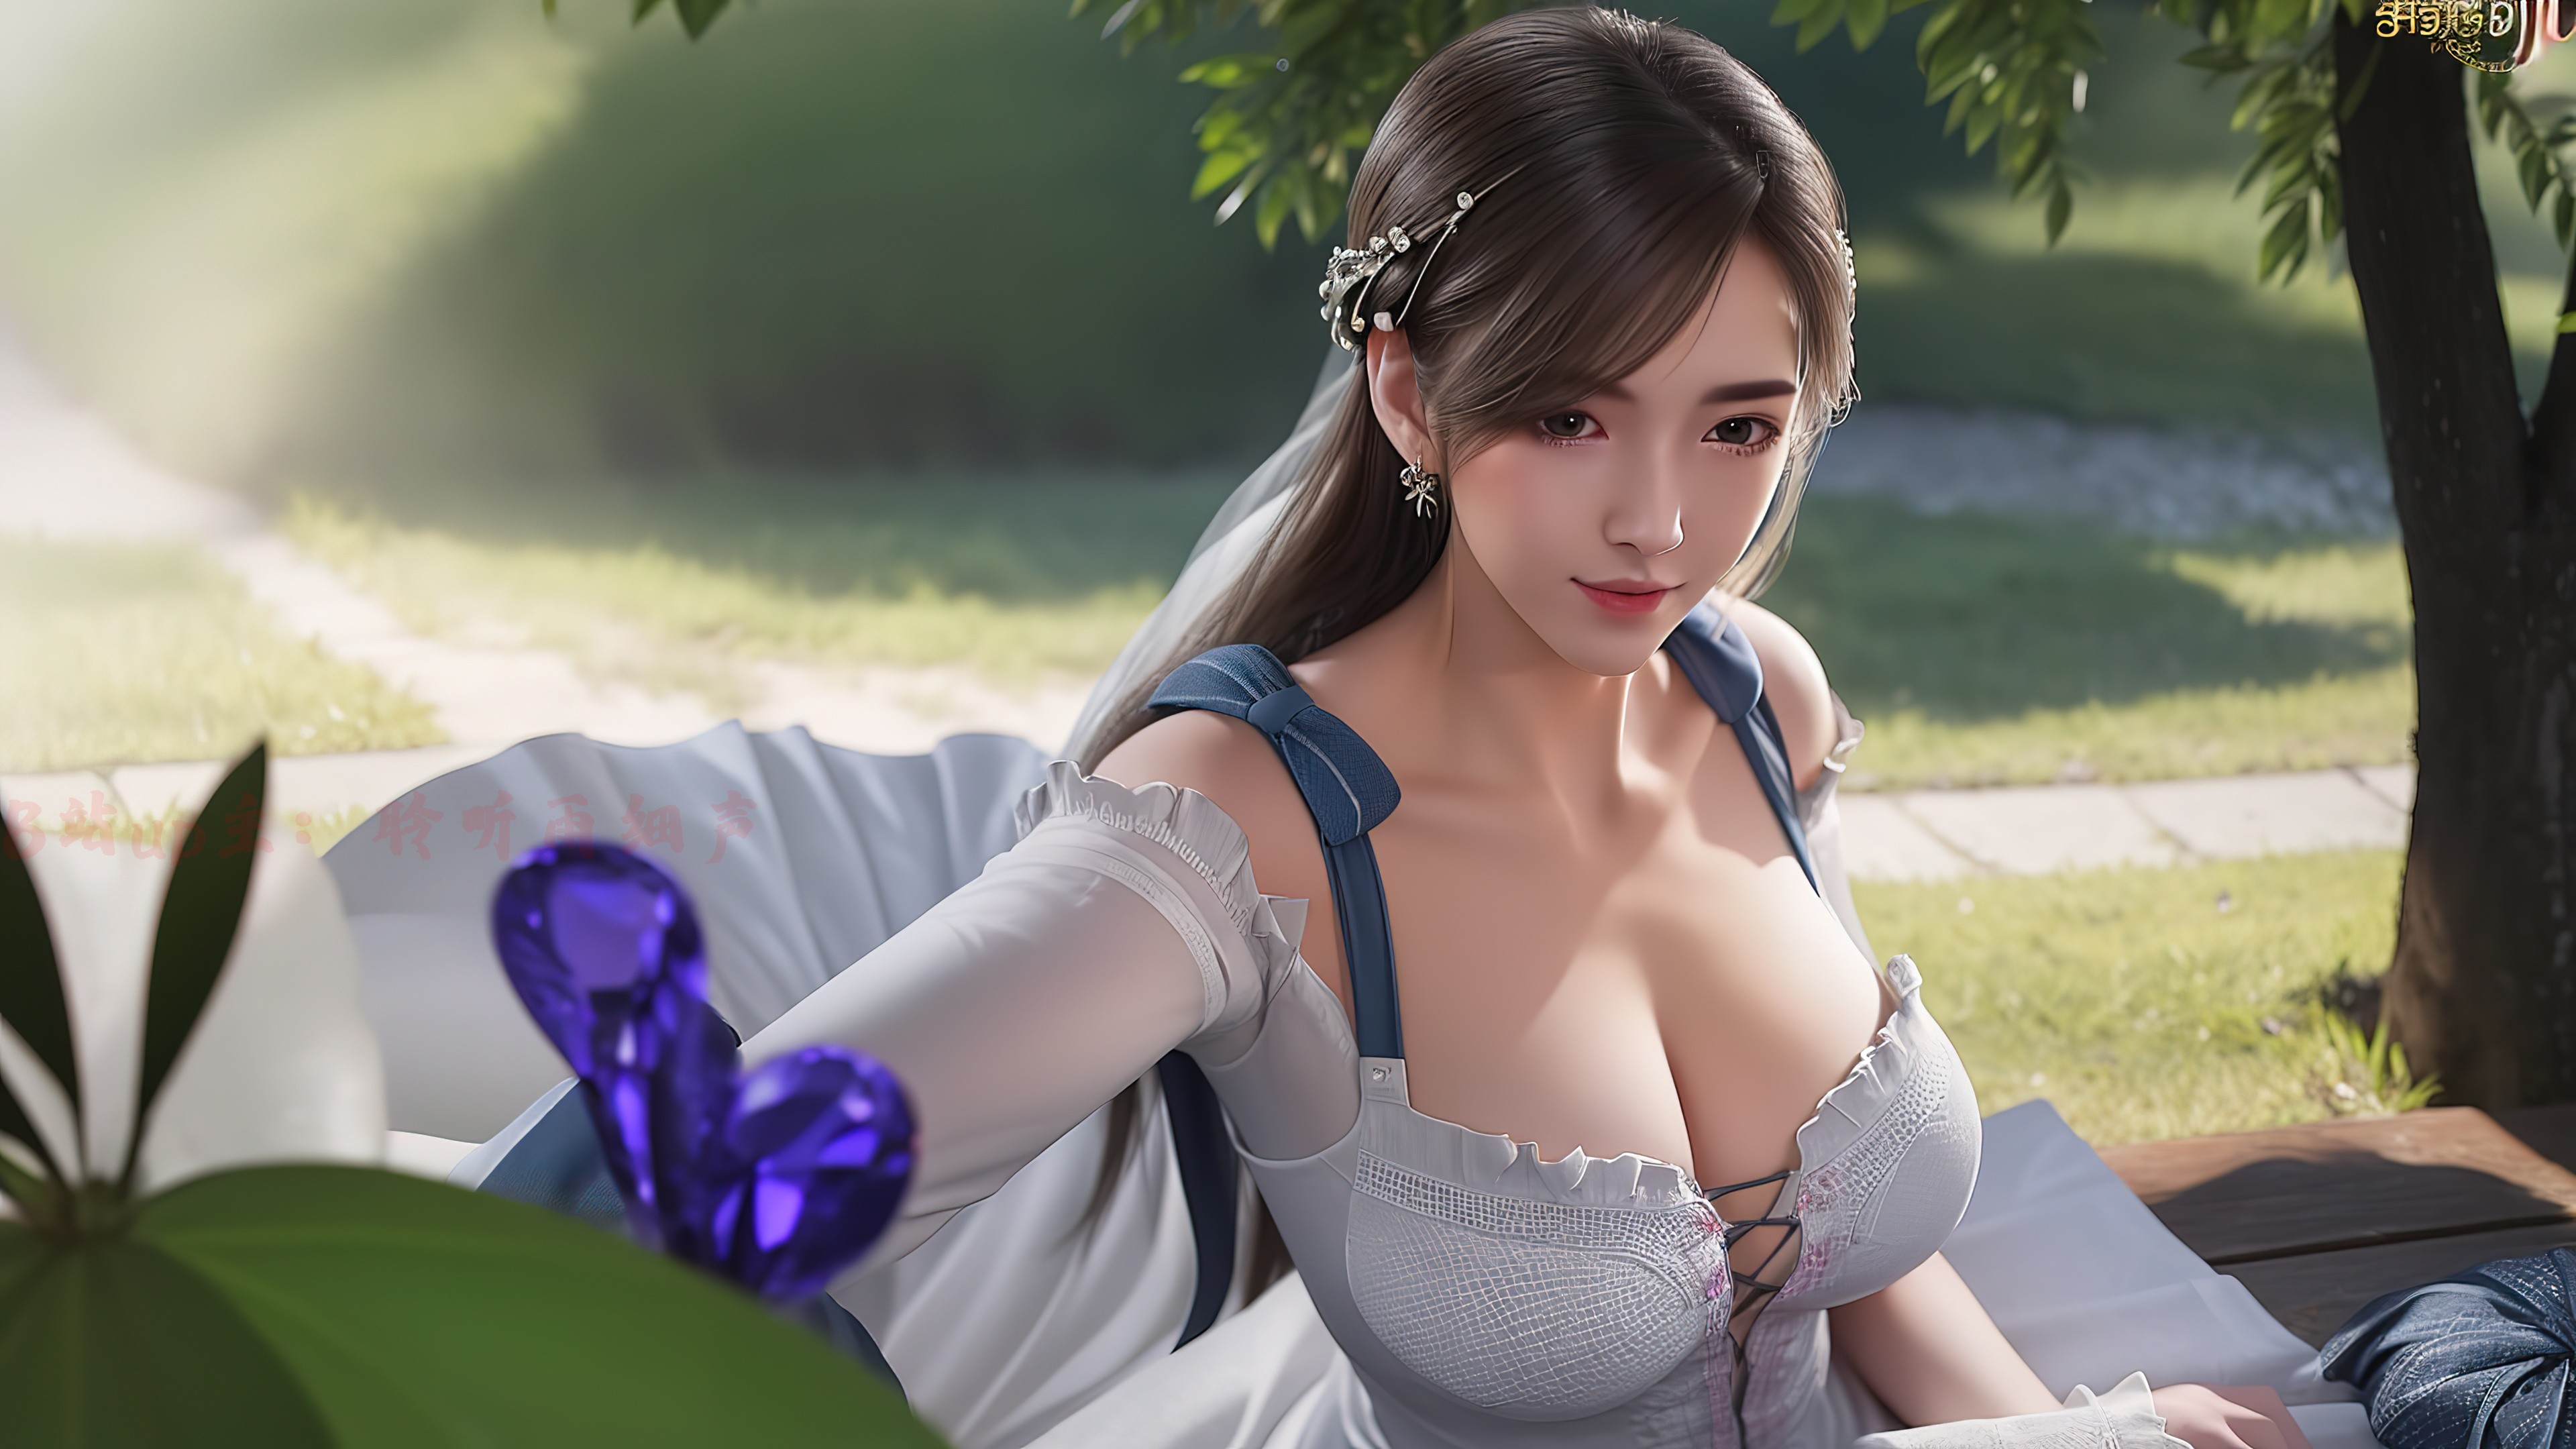 General 3840x2160 Dou Luo Da Lu AI art cleavage big boobs looking at viewer grass long hair earring Asian women